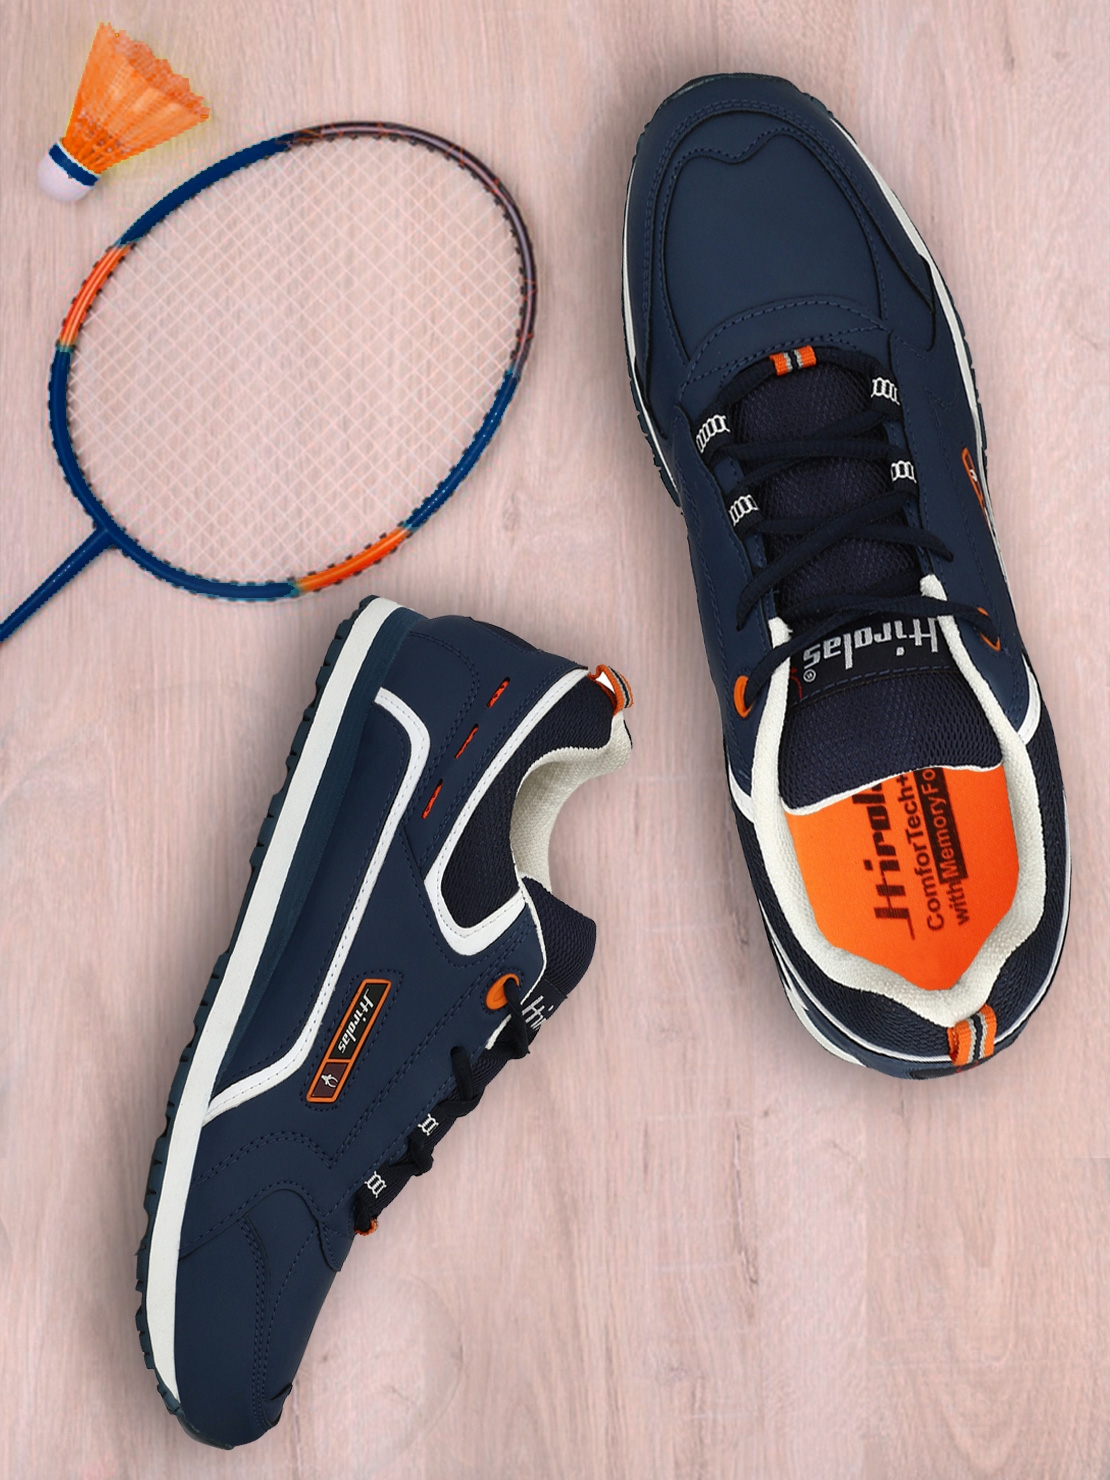 Hirolas | Hirolas Multi Sport Shock Absorbing Walking  Running Fitness Athletic Training Gym Sneaker Shoes - Blue